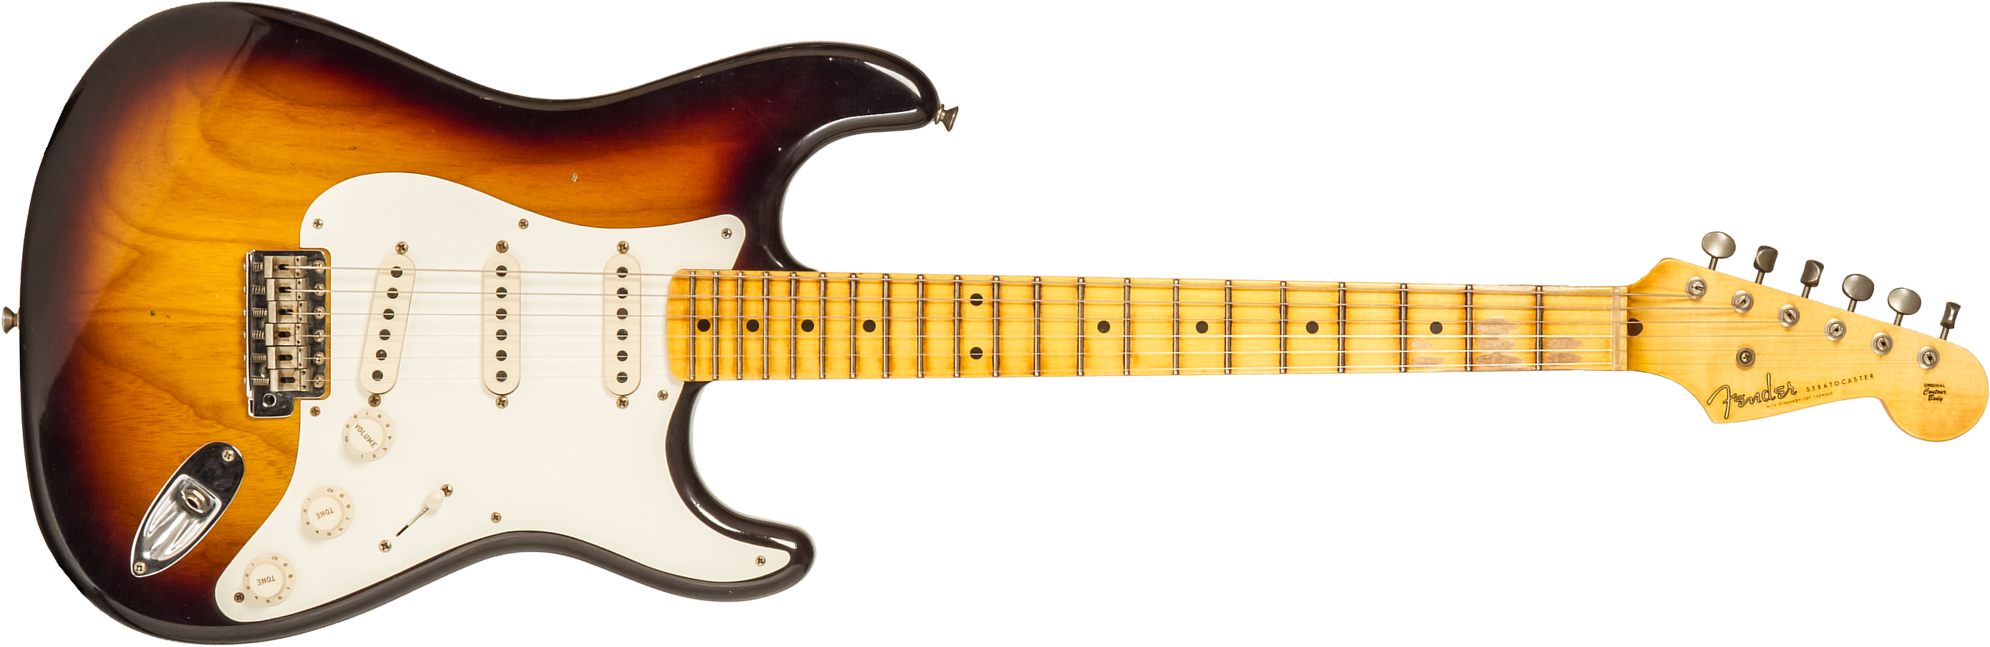 Fender Custom Shop Strat 1955 3s Trem Mn #r130058 - Journeyman Relic 2-color Sunburst - Elektrische gitaar in Str-vorm - Main picture